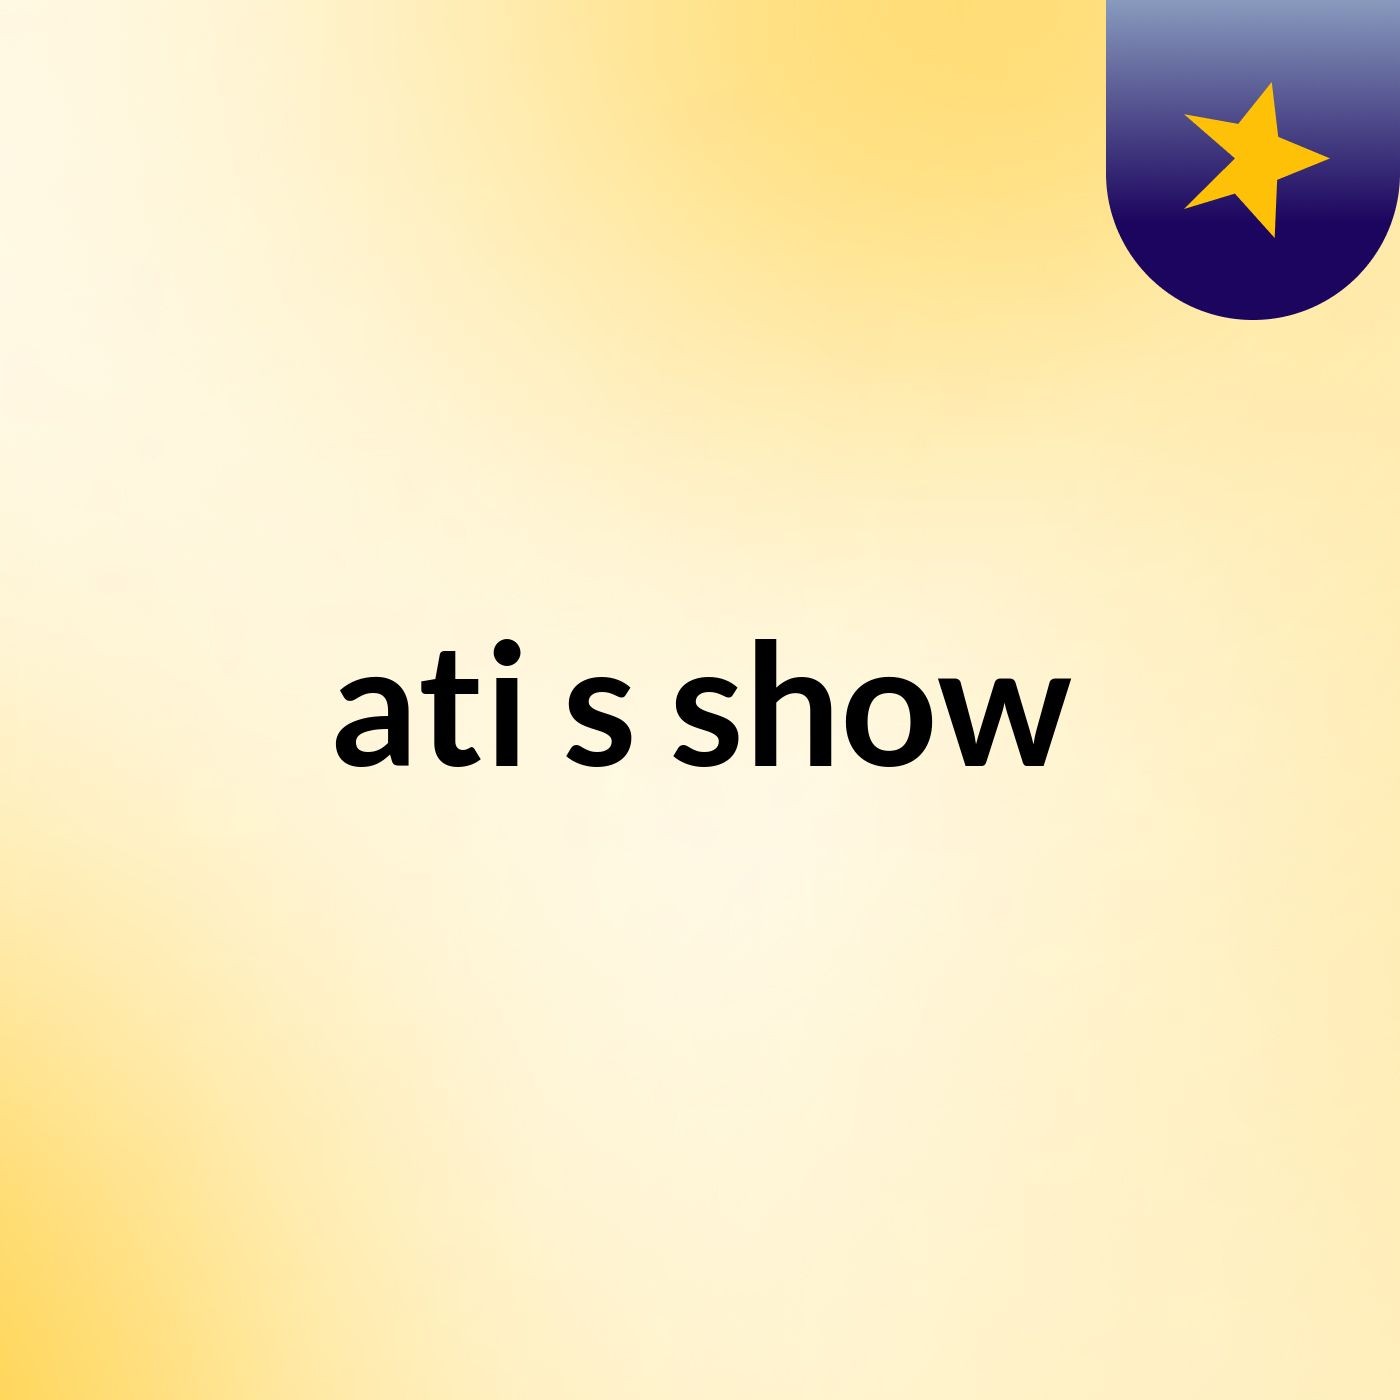 ati's show